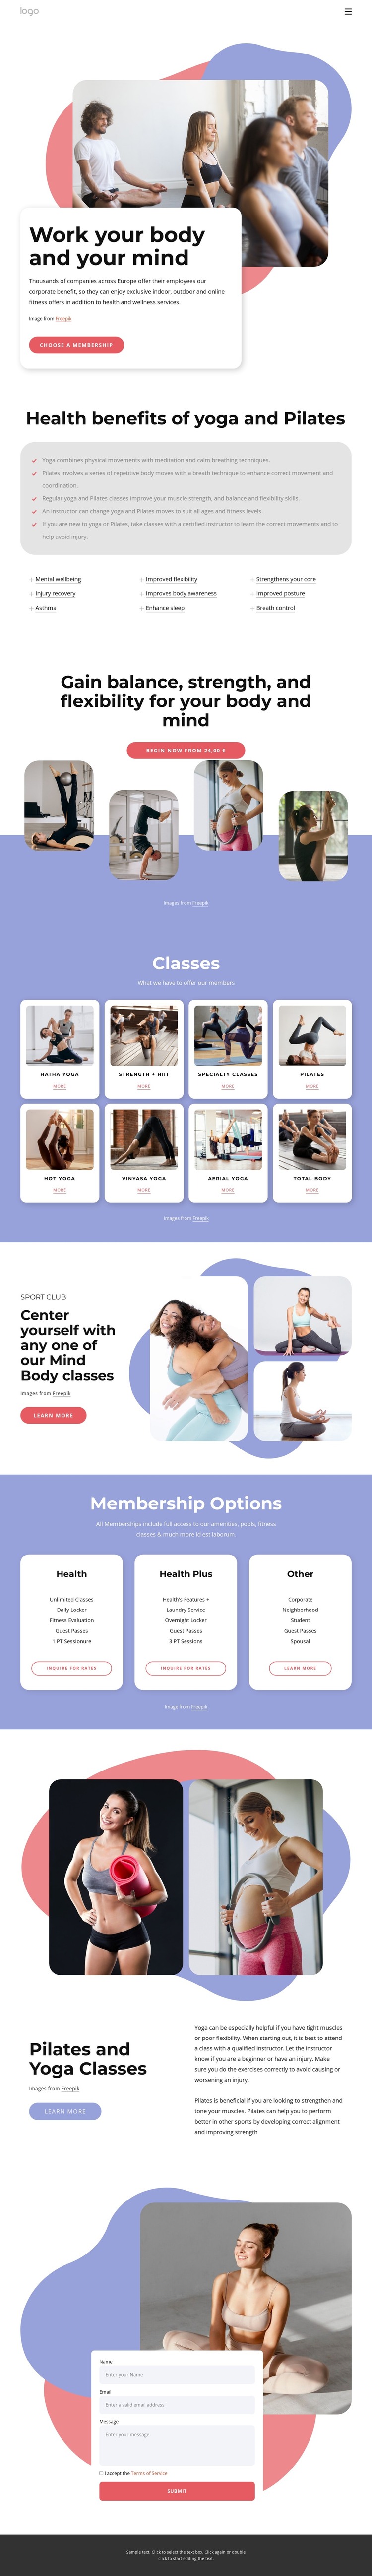 Pilates and yoga classes Web Design